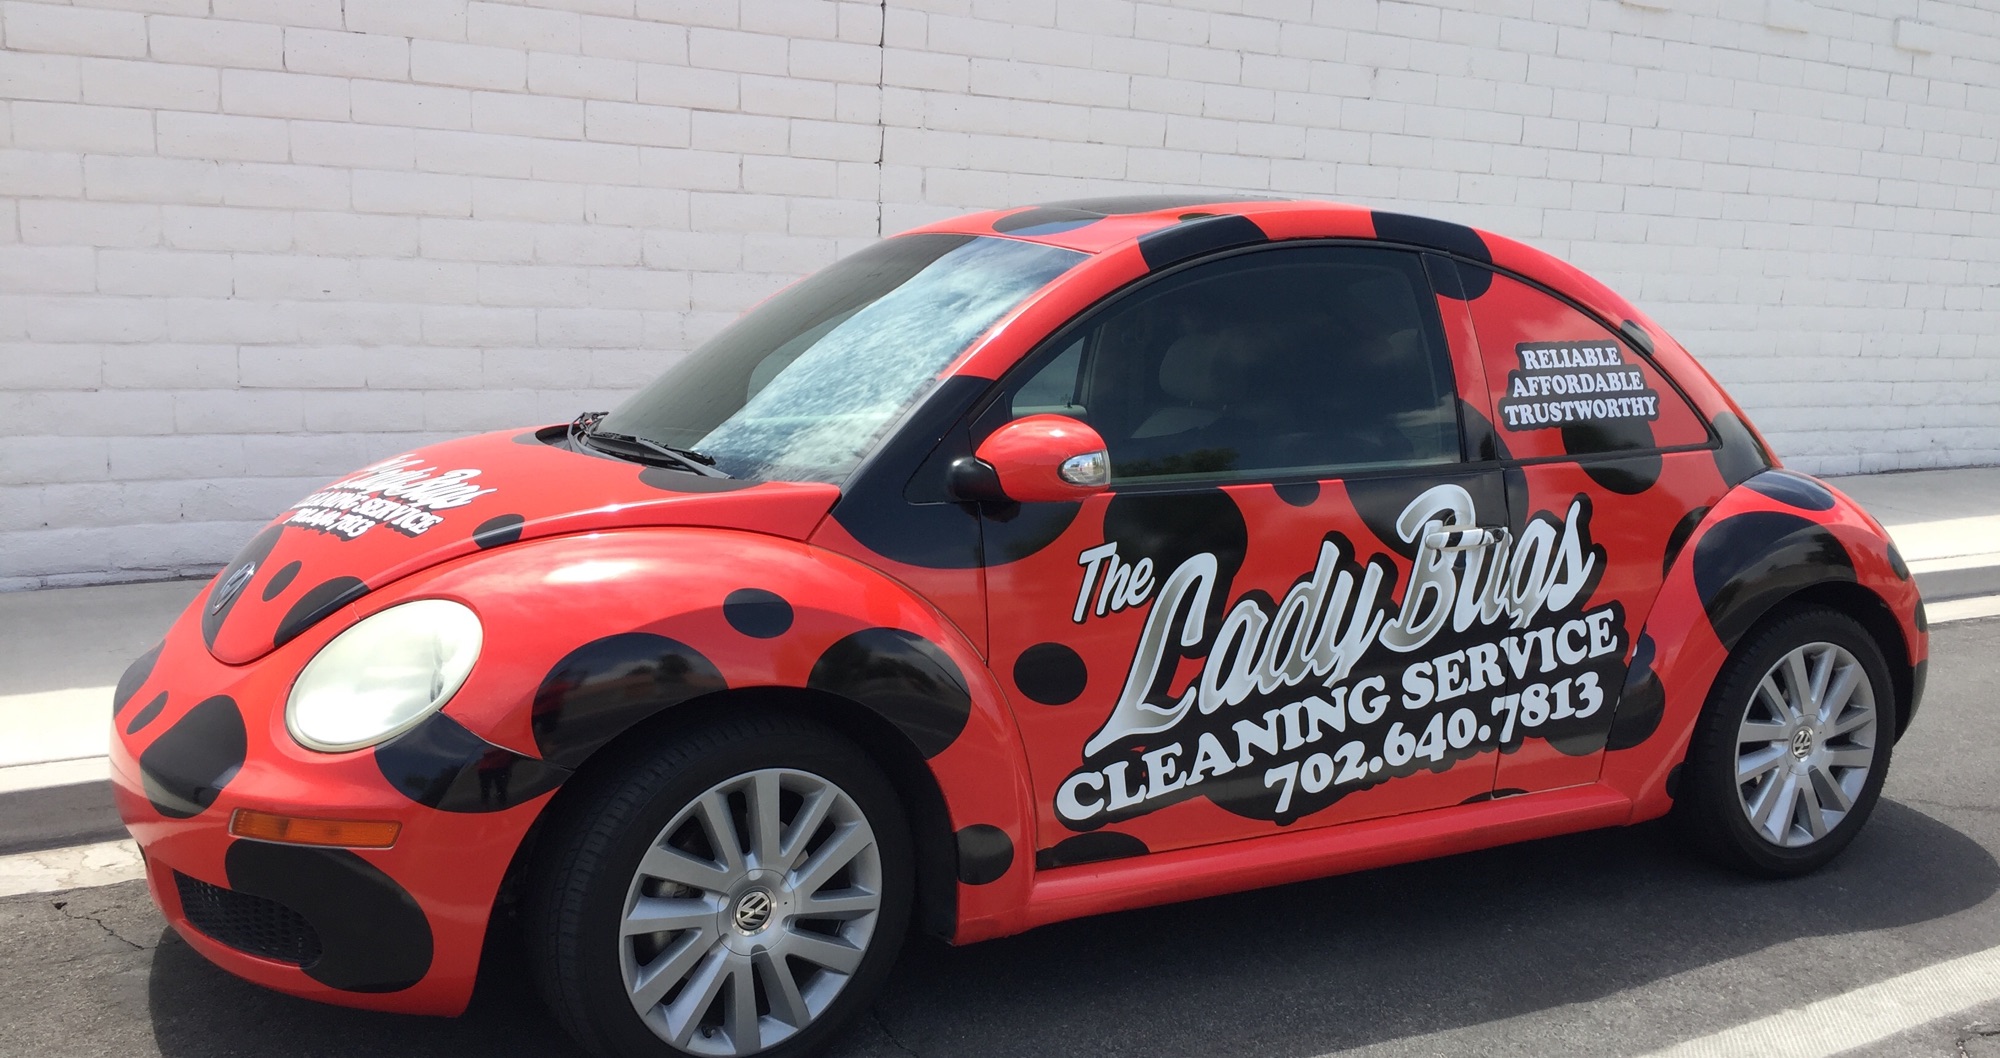 The Ladybug's Cleaning Service Logo